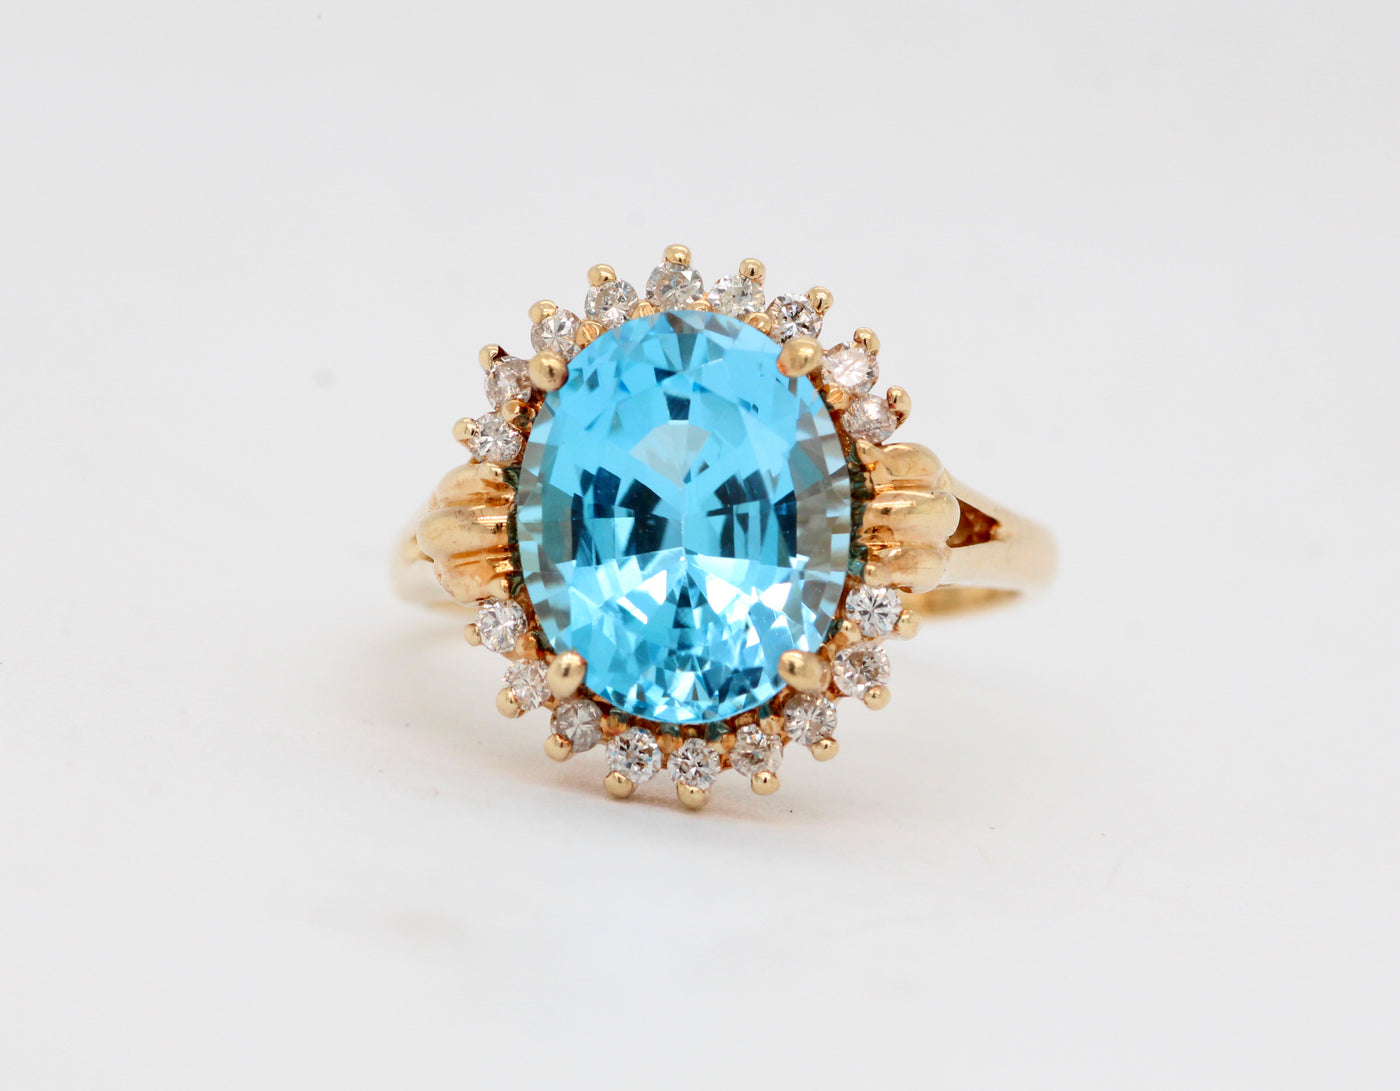 14KY Blue Topaz and Diamond Ring